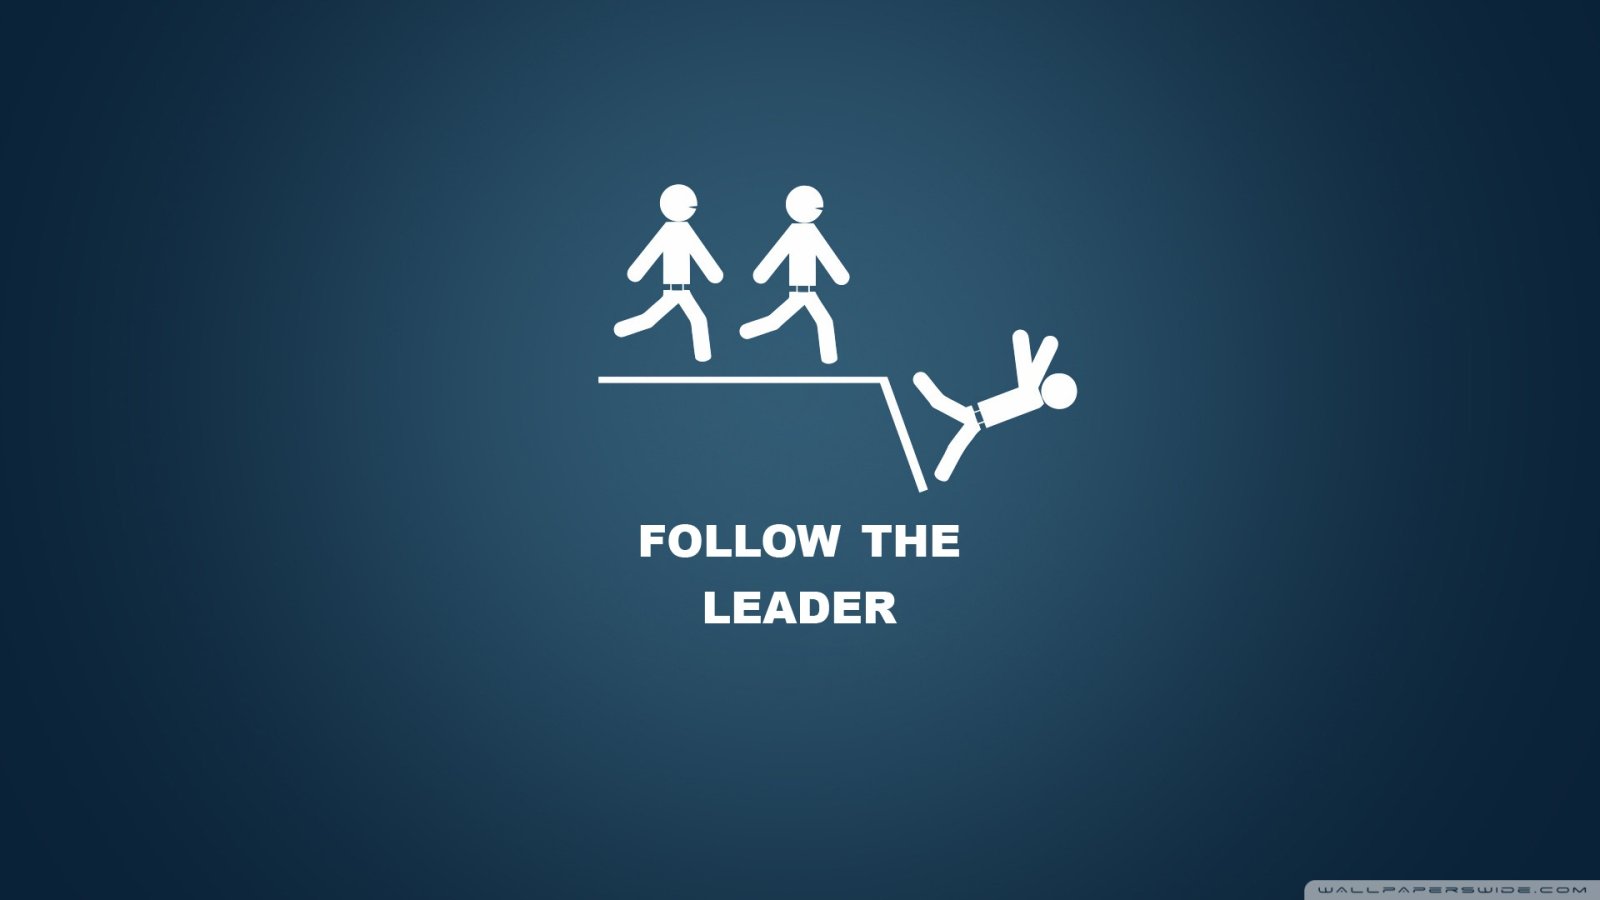 follow_the_leader-wallpaper-1920x1080.jpg